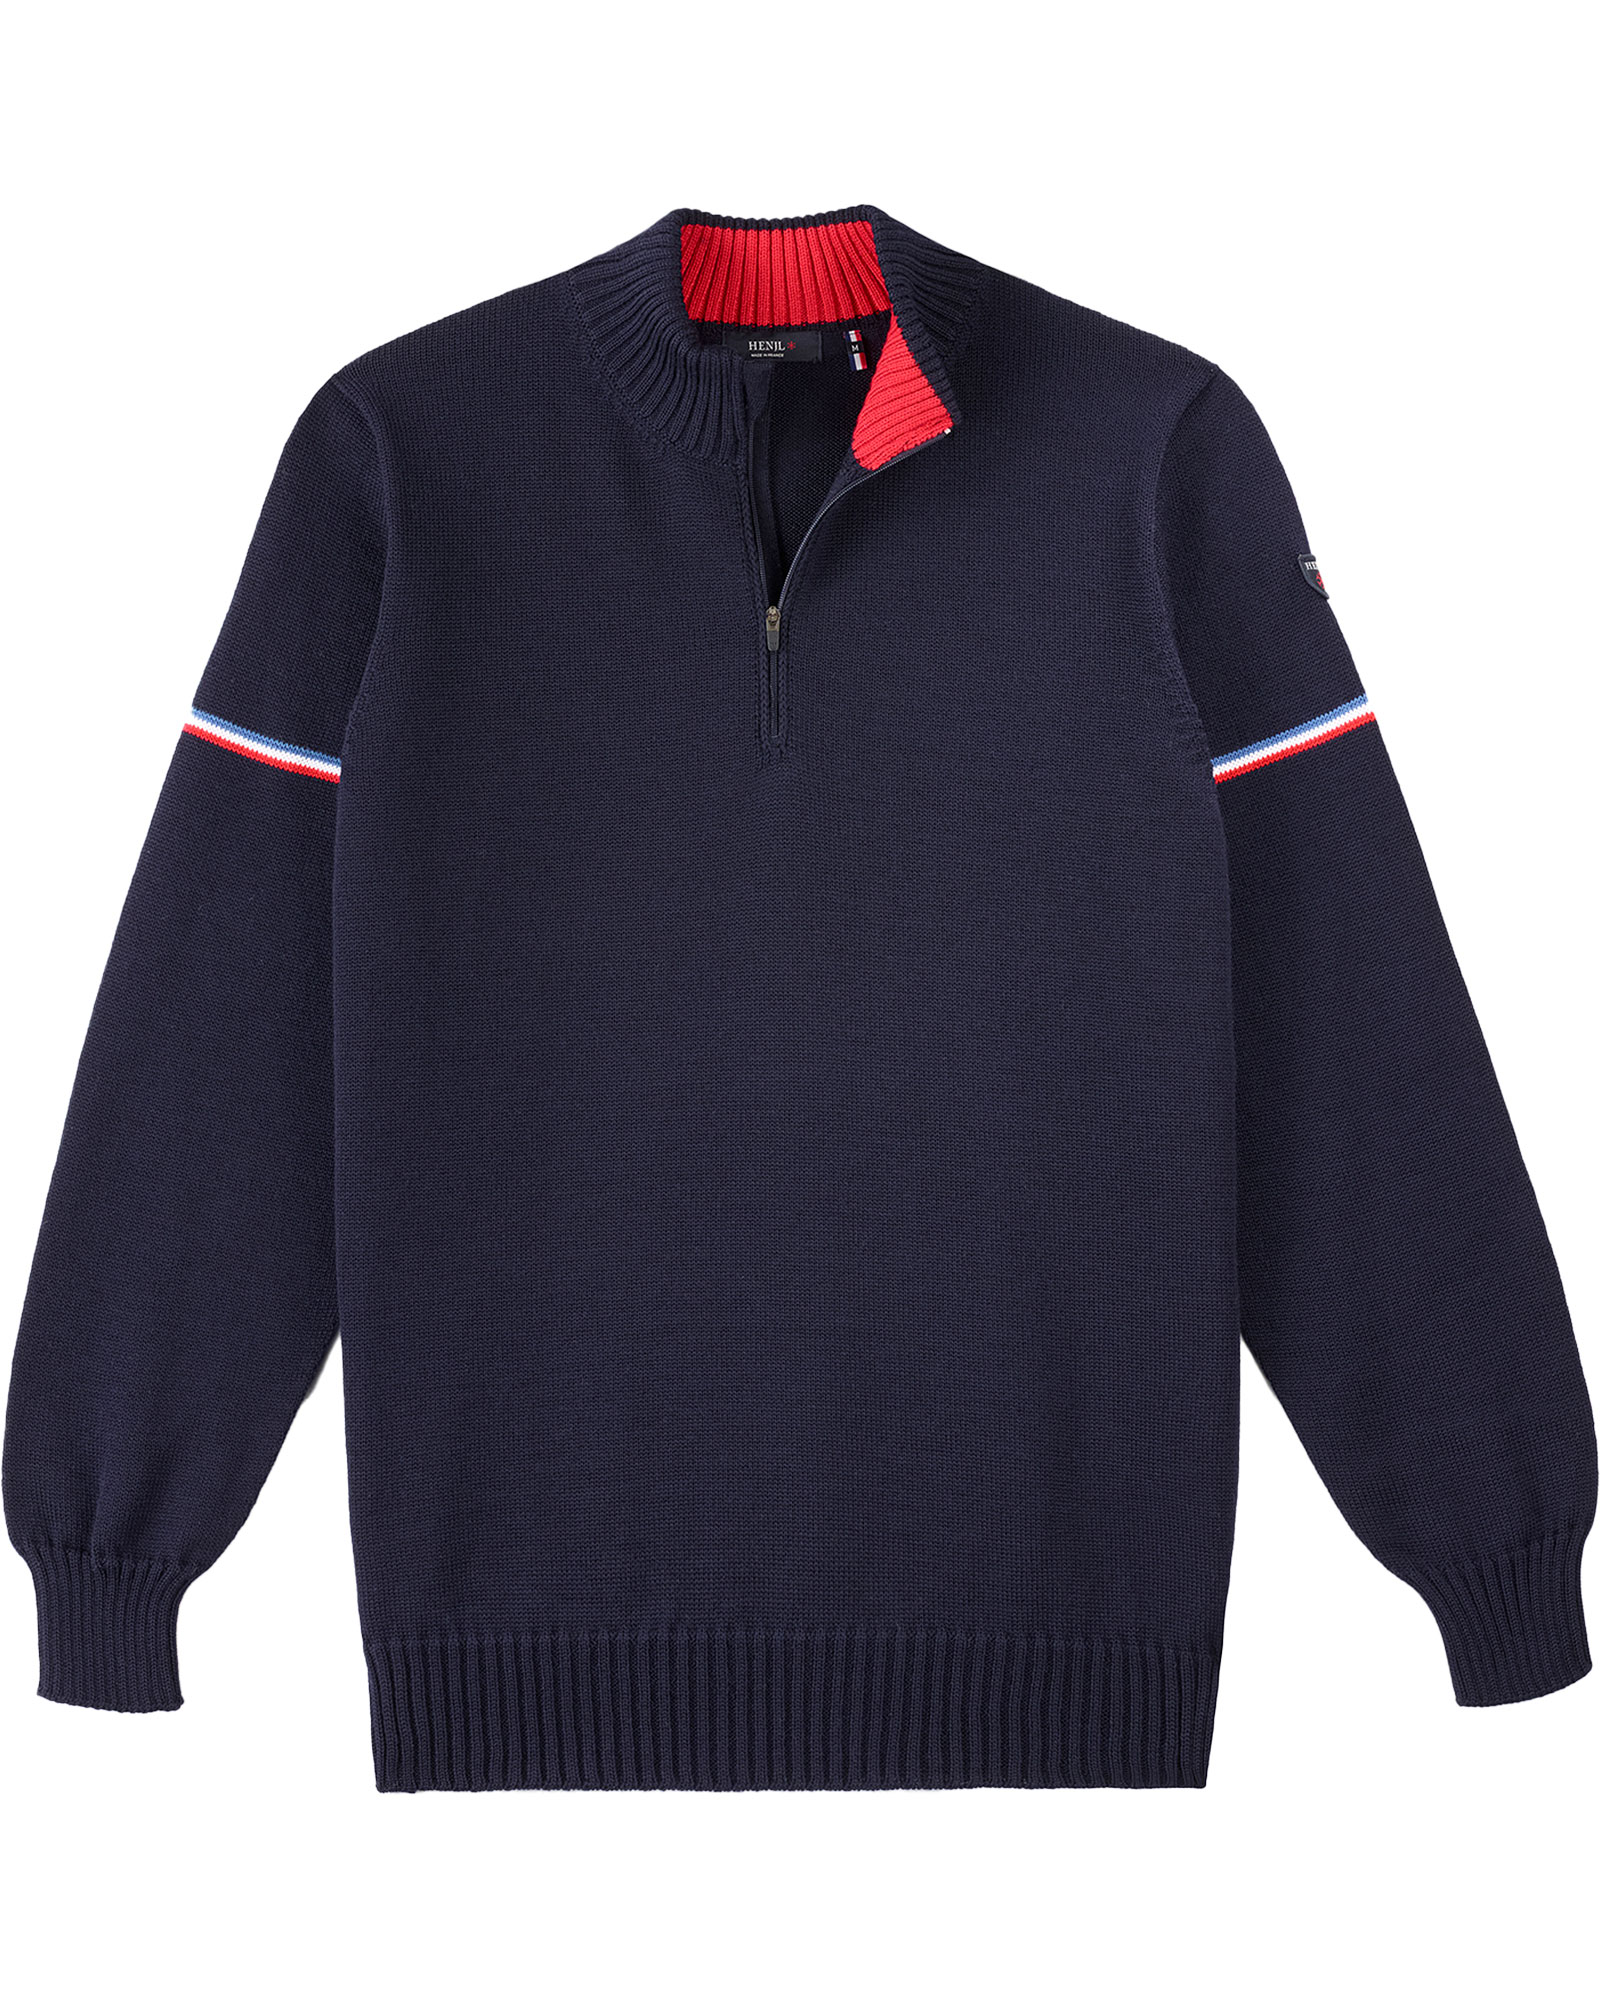 Henjl Men’s Dixon Sweater - Navy L